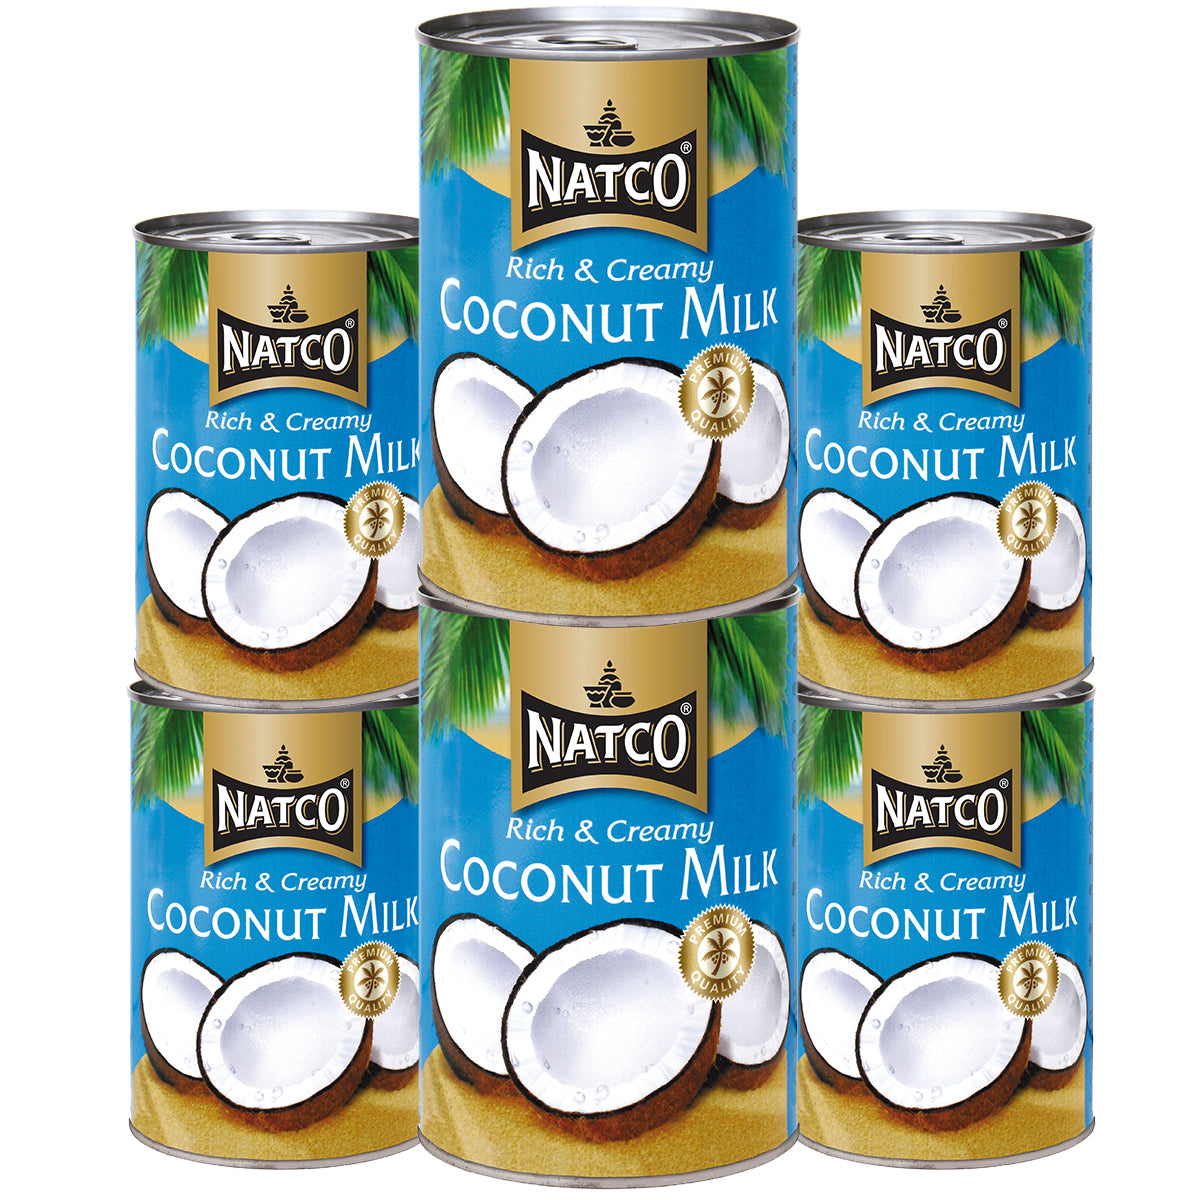 Natco Coconut Milk, 6 x 400ml